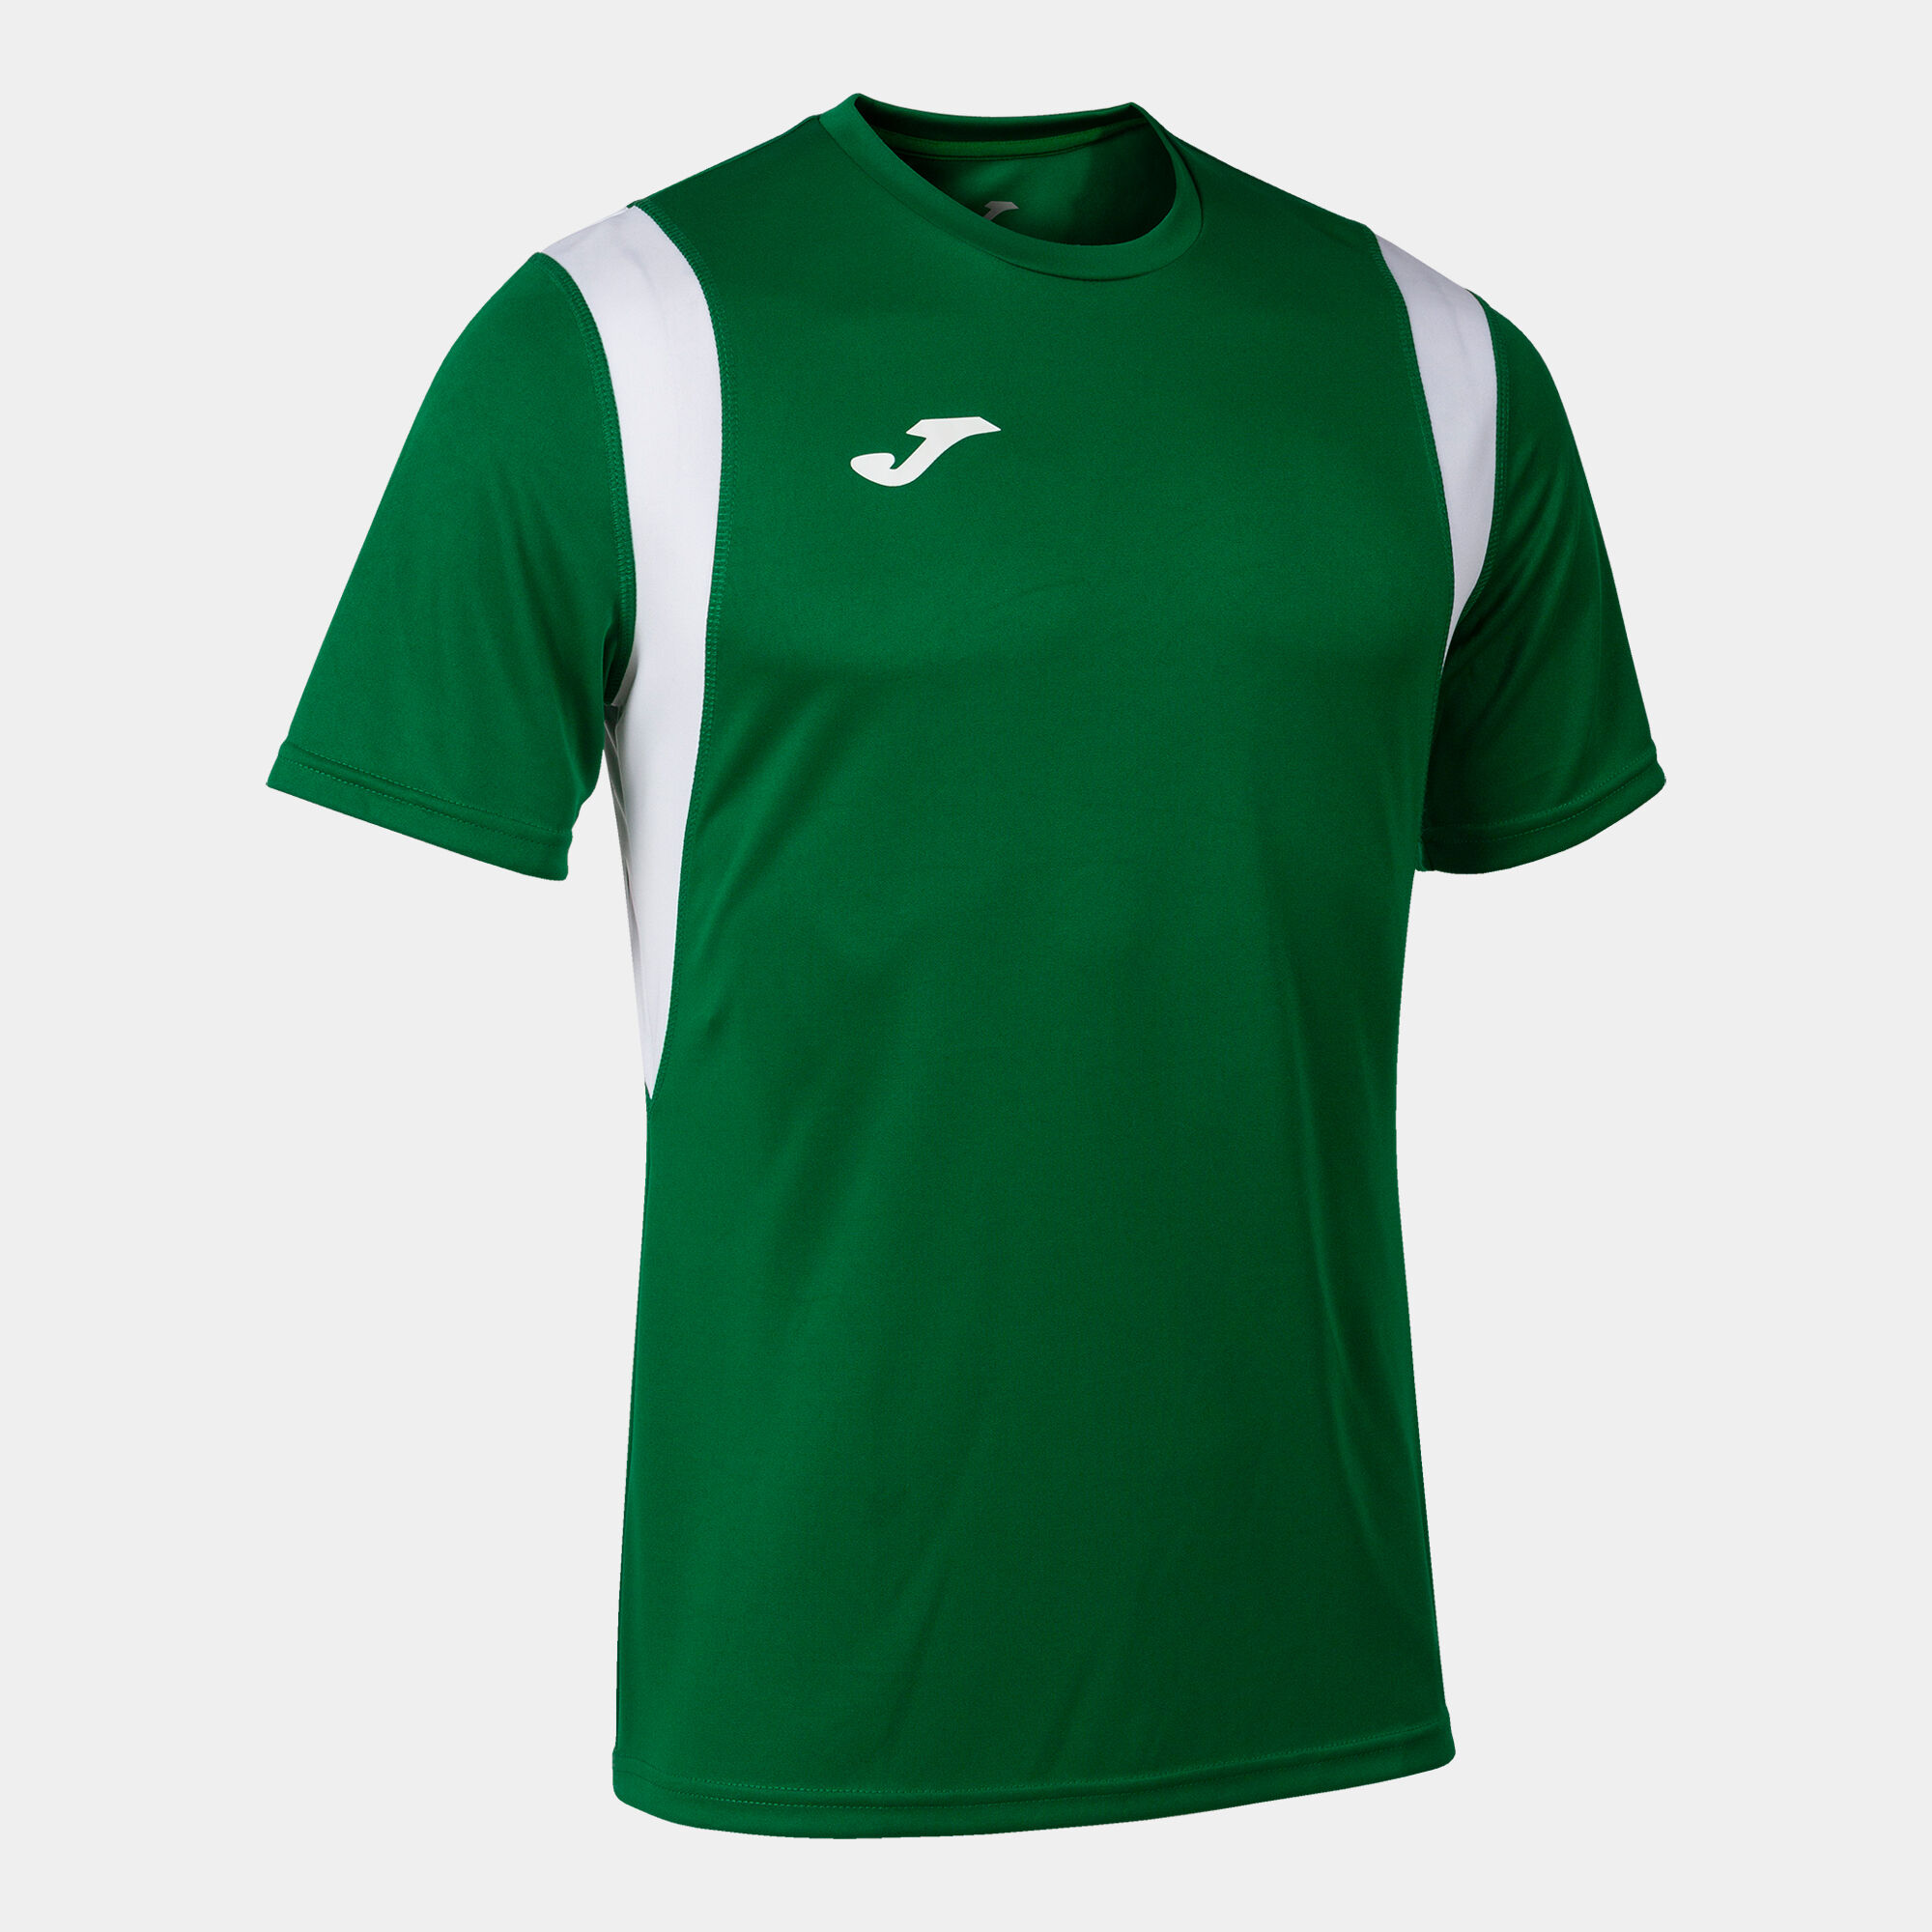 Camiseta manga corta hombre Dinamo verde